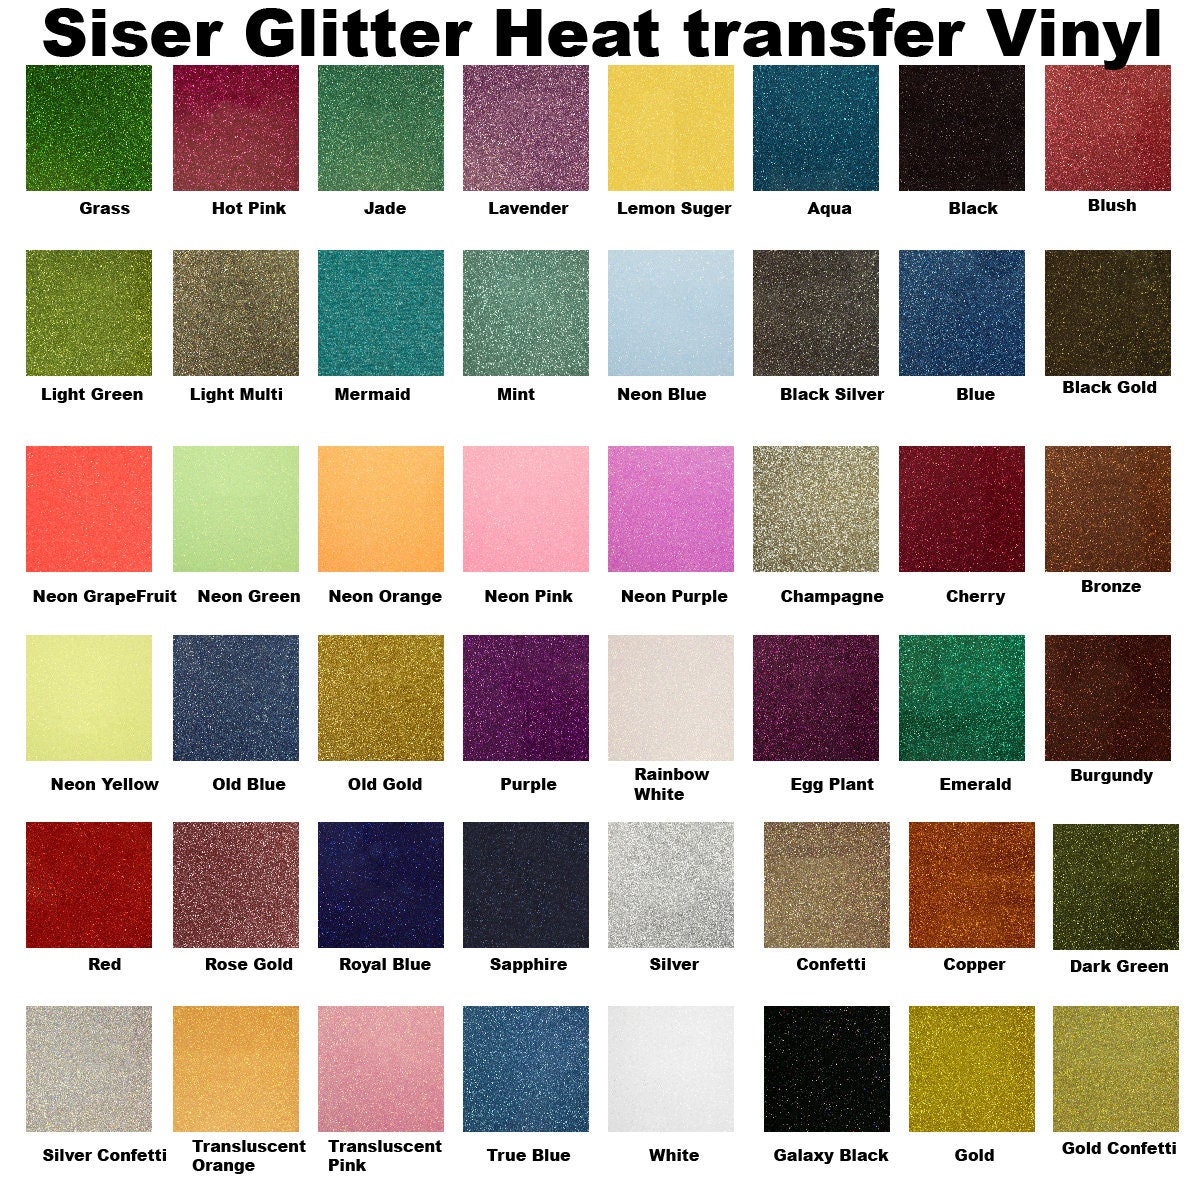  Siser Glitter HTV 20 x 12 Sheet - Iron on Heat Transfer Vinyl  (Old Gold) : Arts, Crafts & Sewing